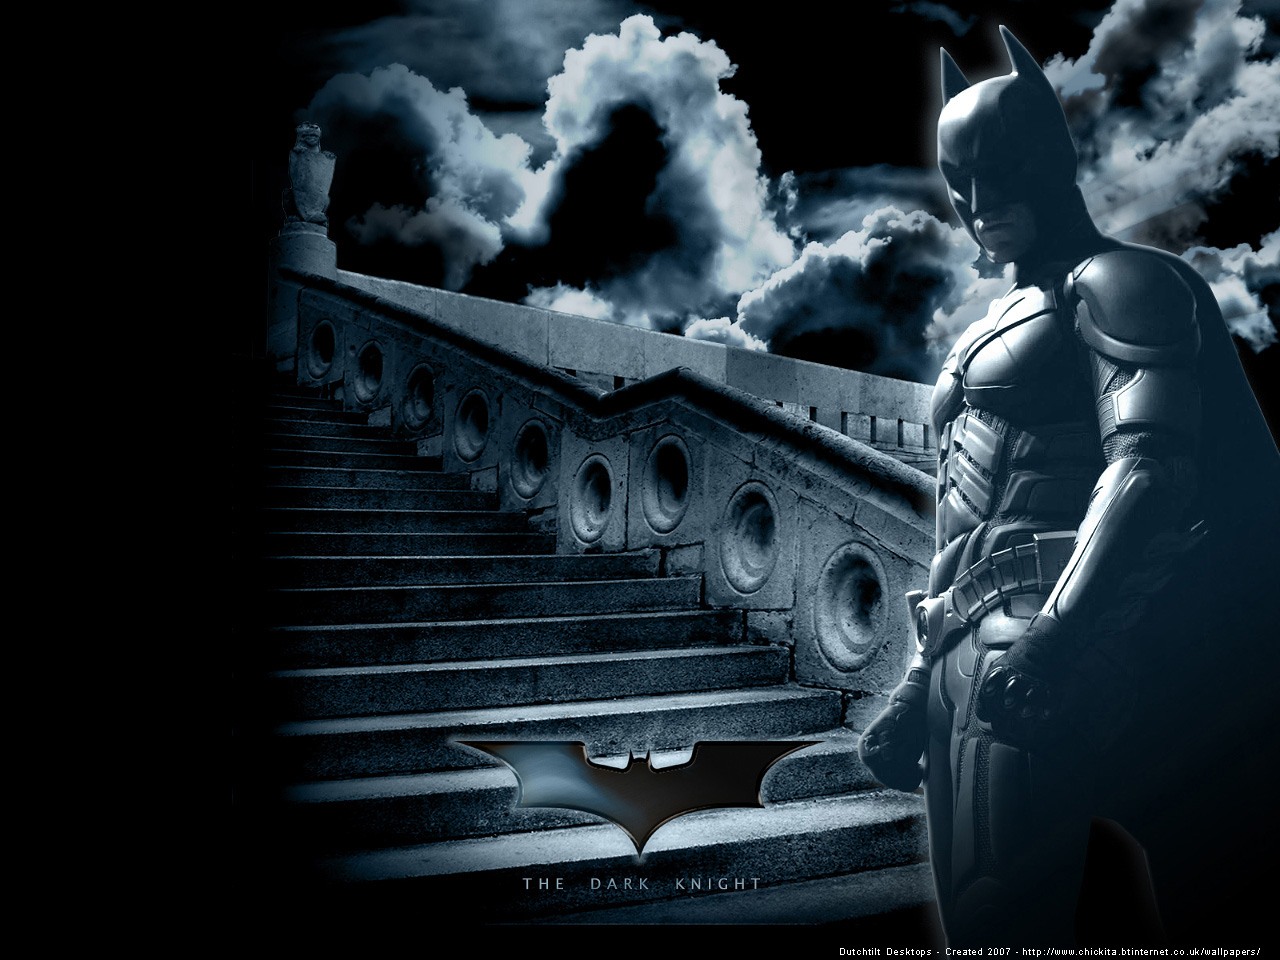 IMO... Batman, The Dark Knight (spoilers)